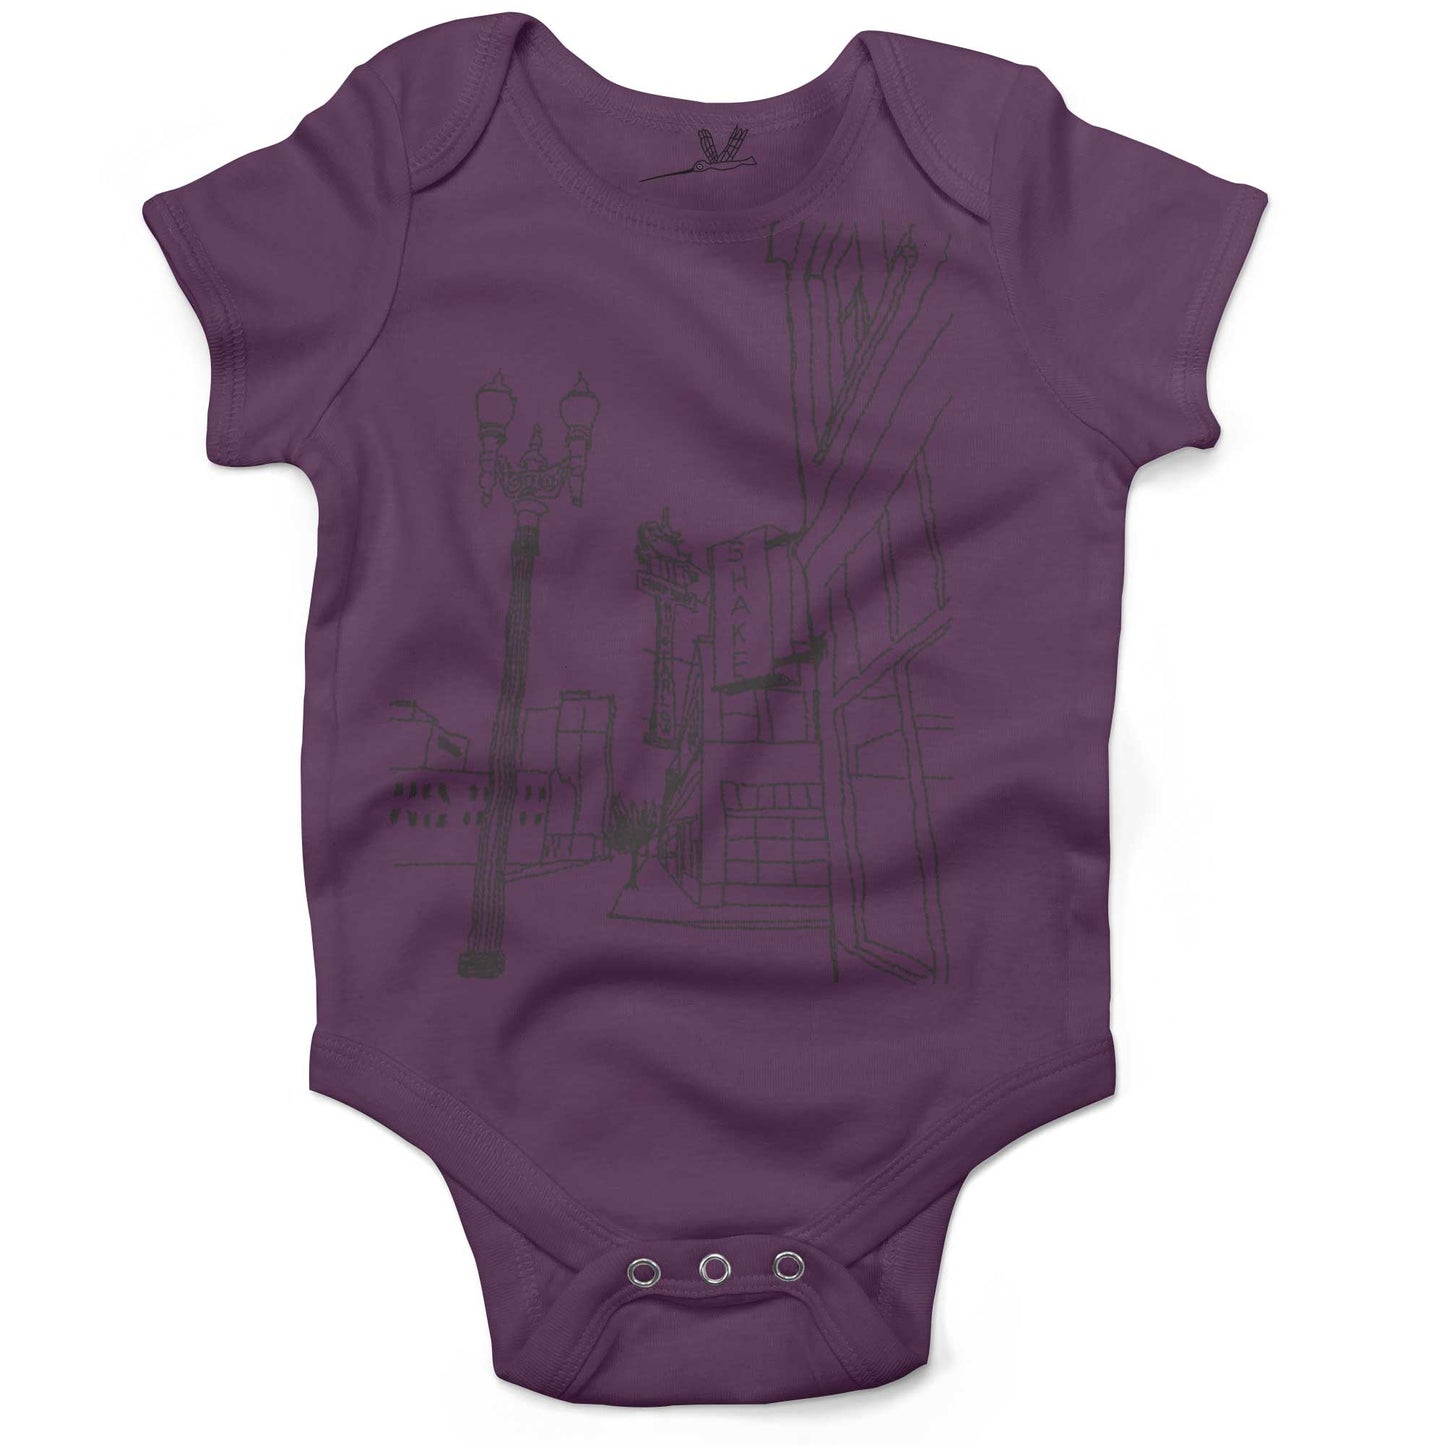 Hung Far Low Restaurant Infant Bodysuit-Organic Purple-3-6 months